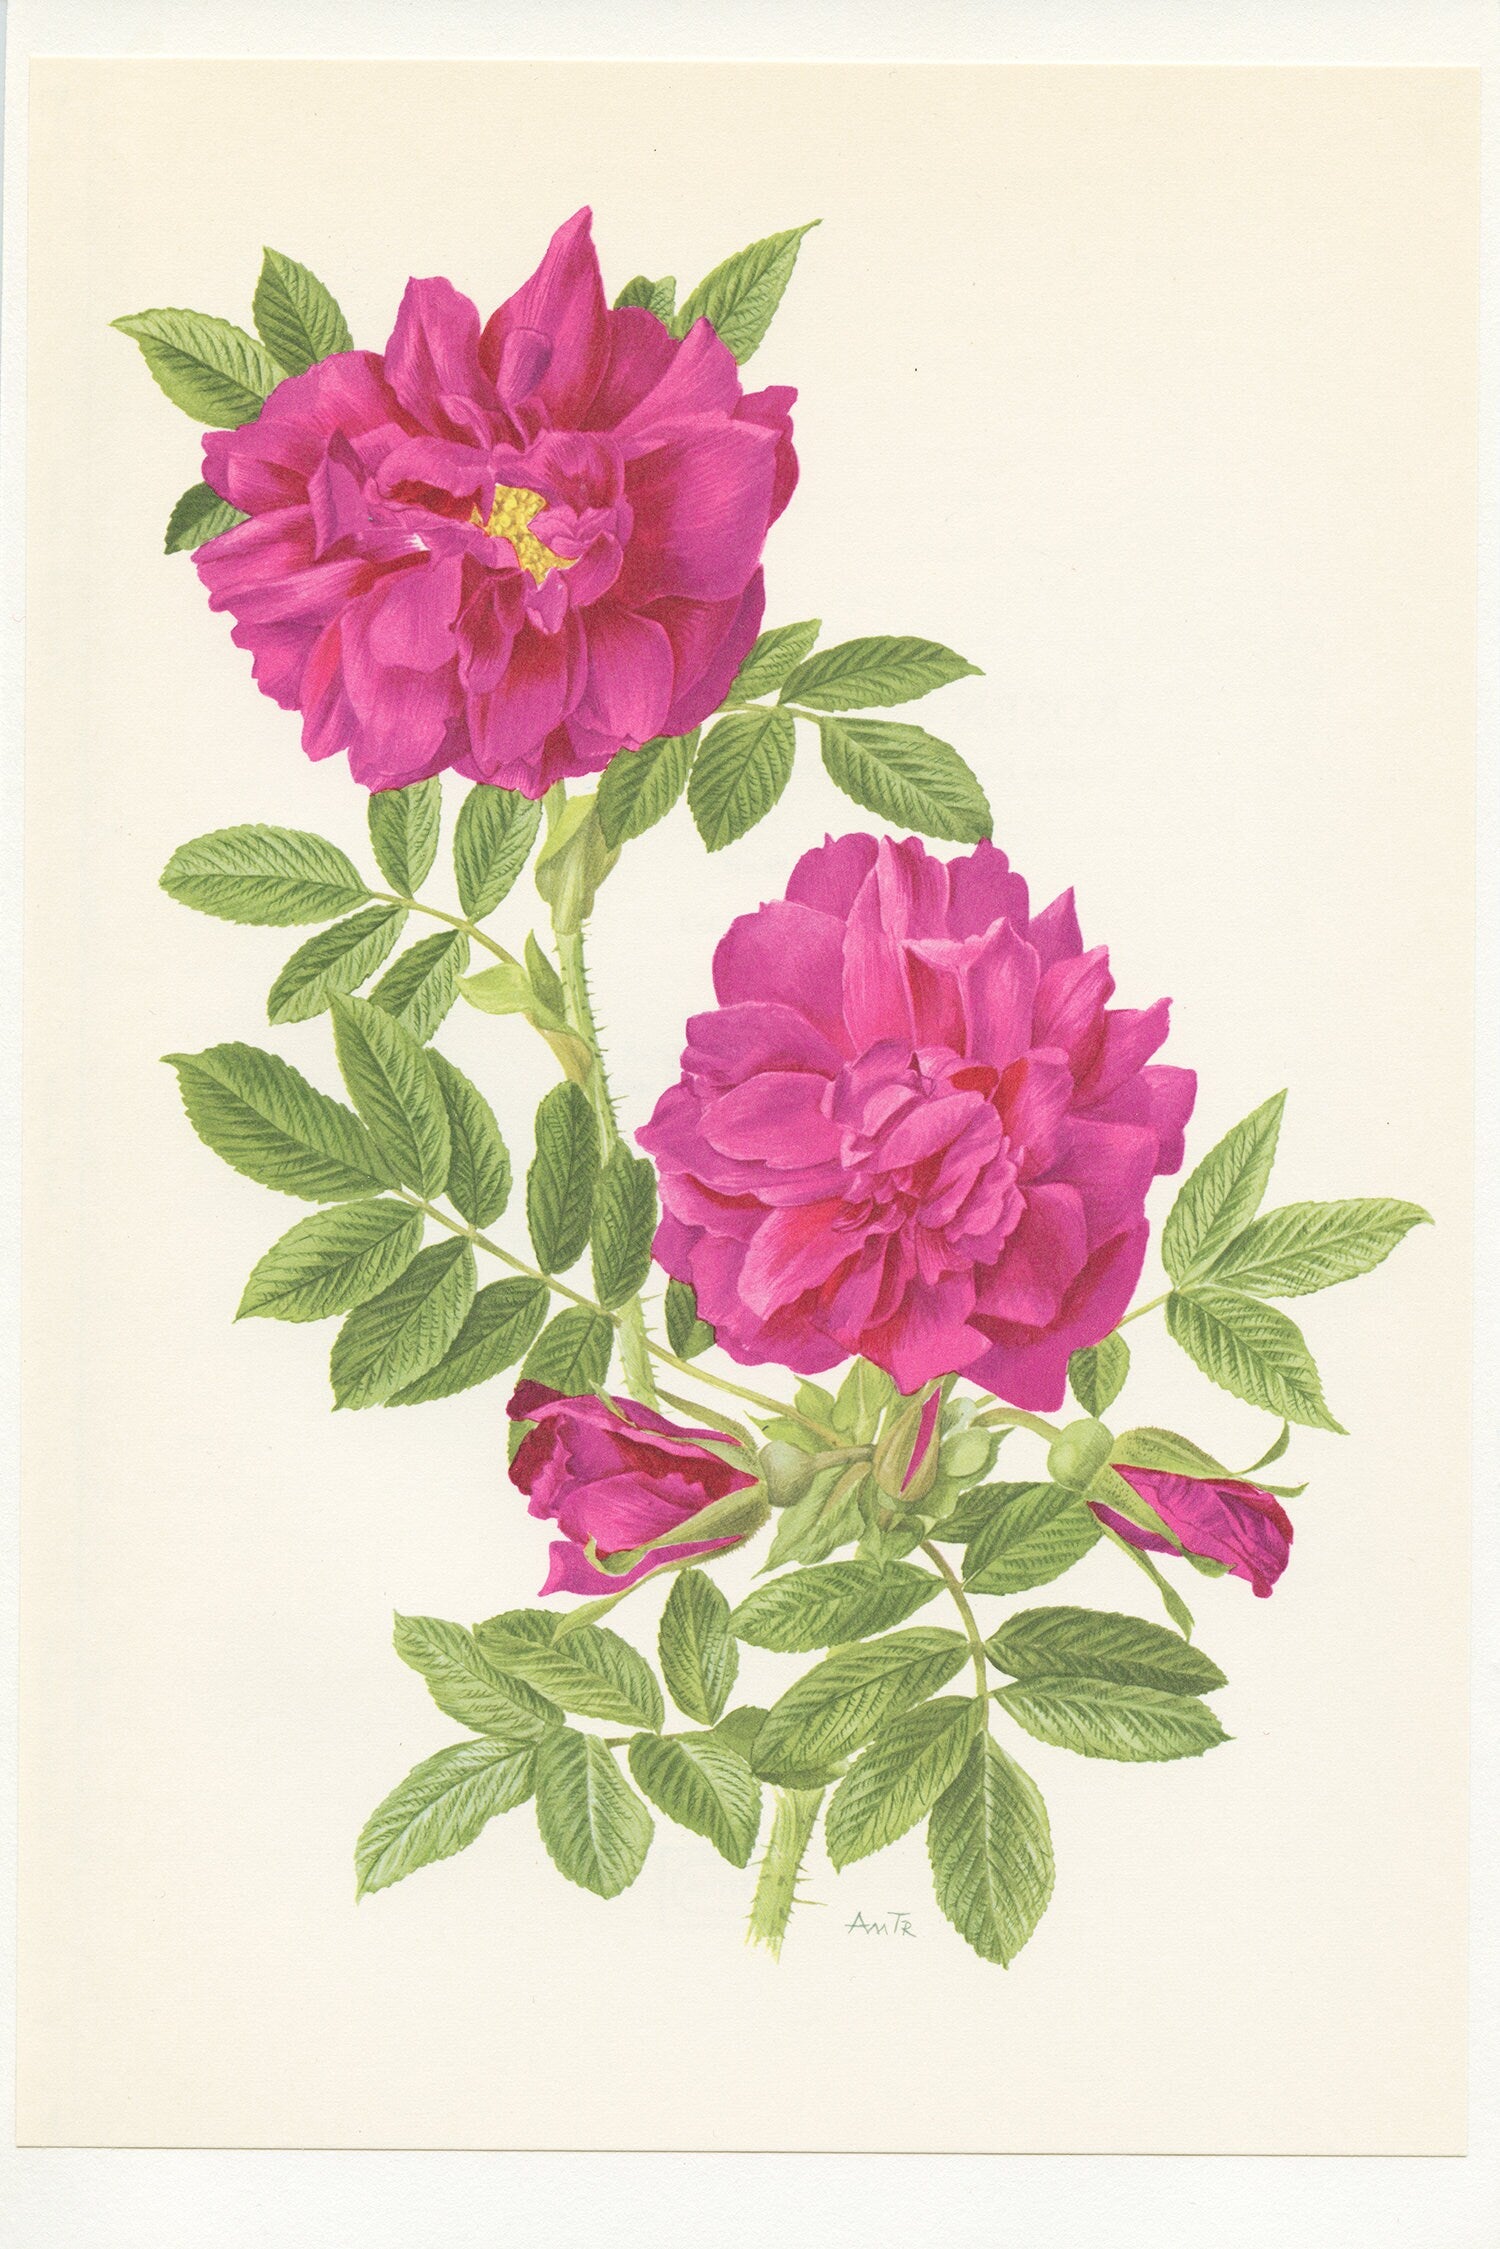 1962 Roseraie de l'Hay Purple Rose botanical print. Vintage pink old rose poster. Gardener gift. Flowers botanical art. French Country decor